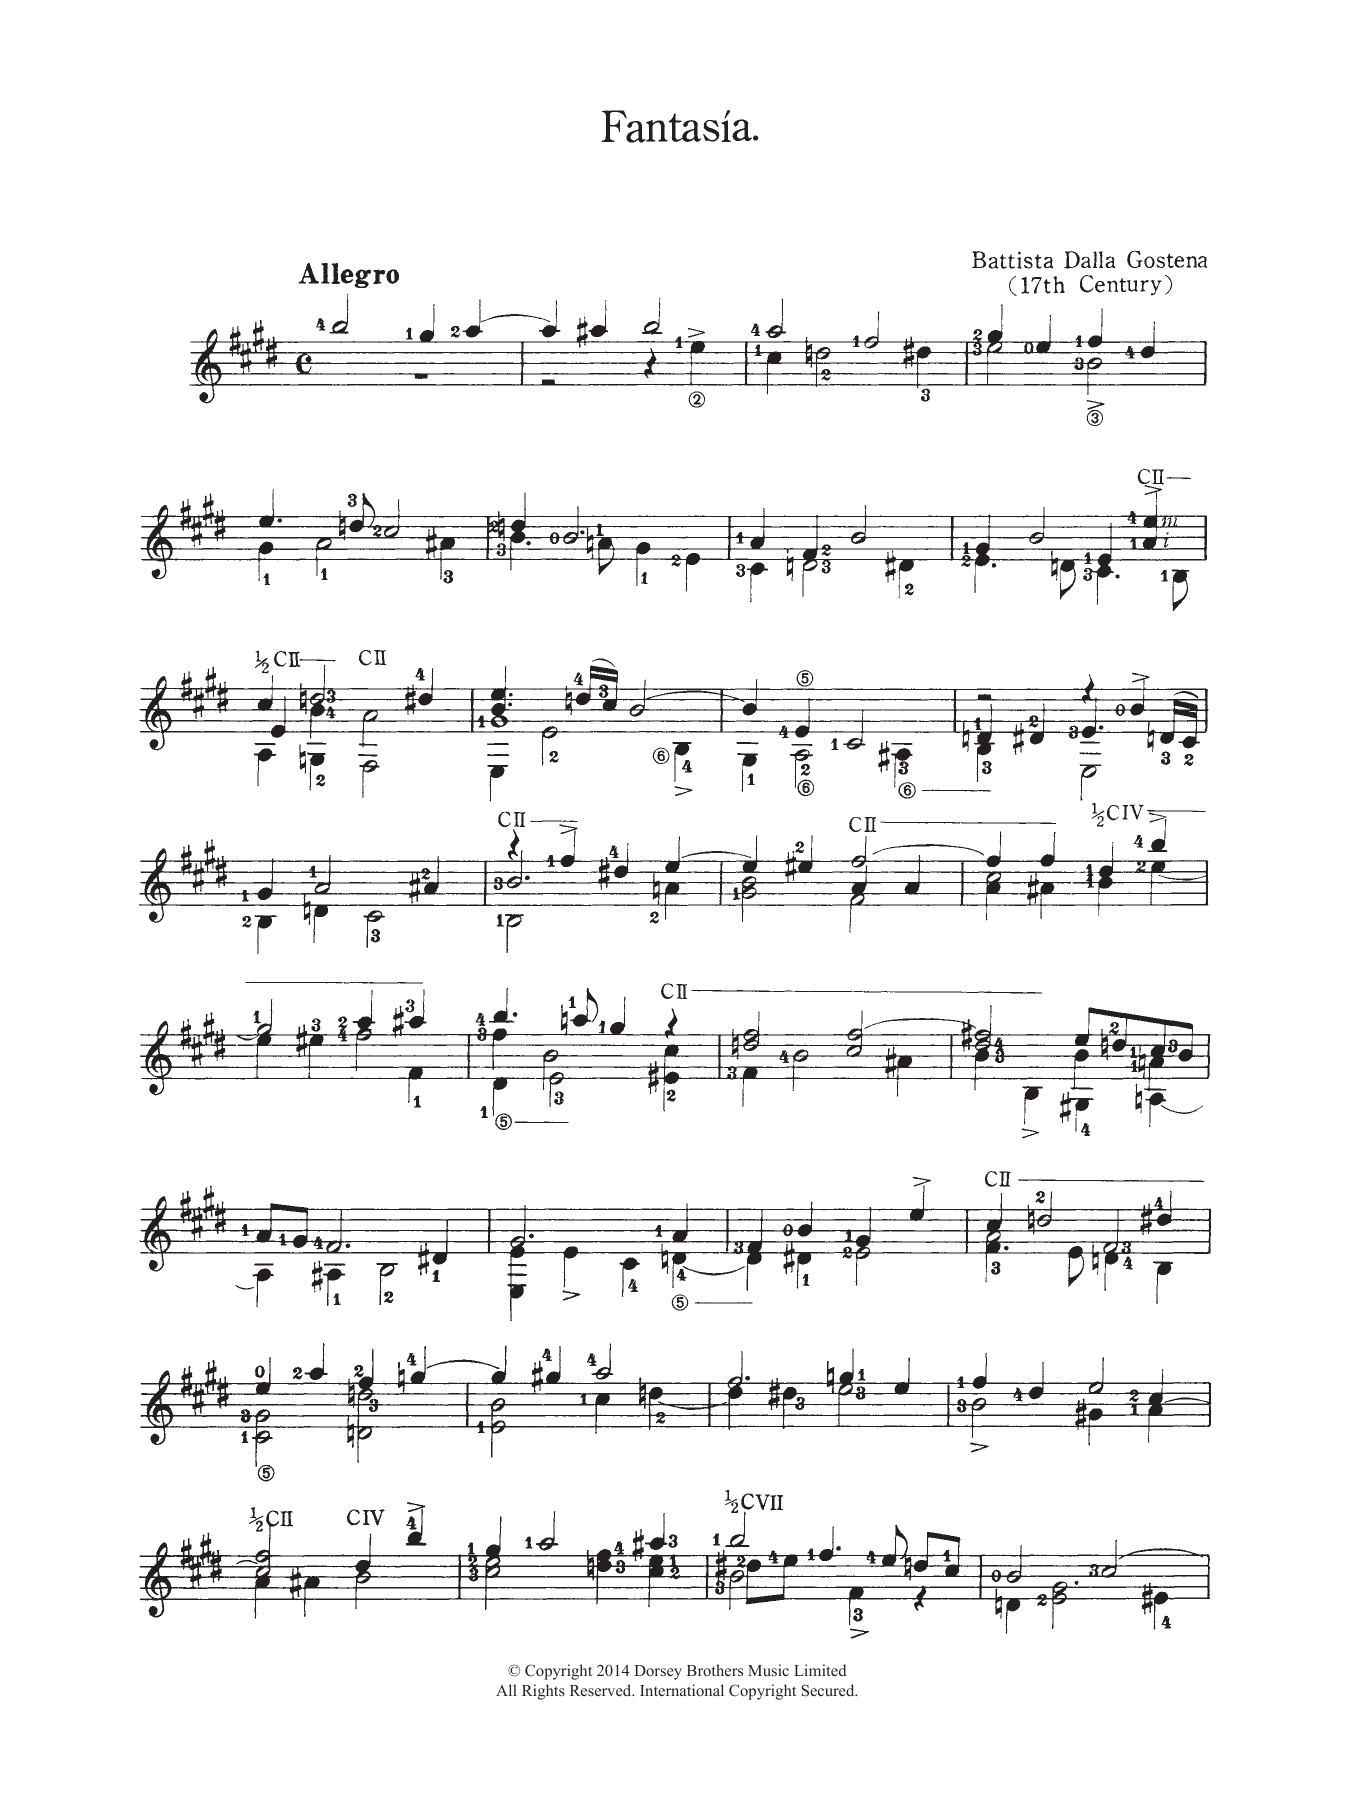 Battista Dalla Gostena Fantasia Sheet Music Notes & Chords for Guitar - Download or Print PDF